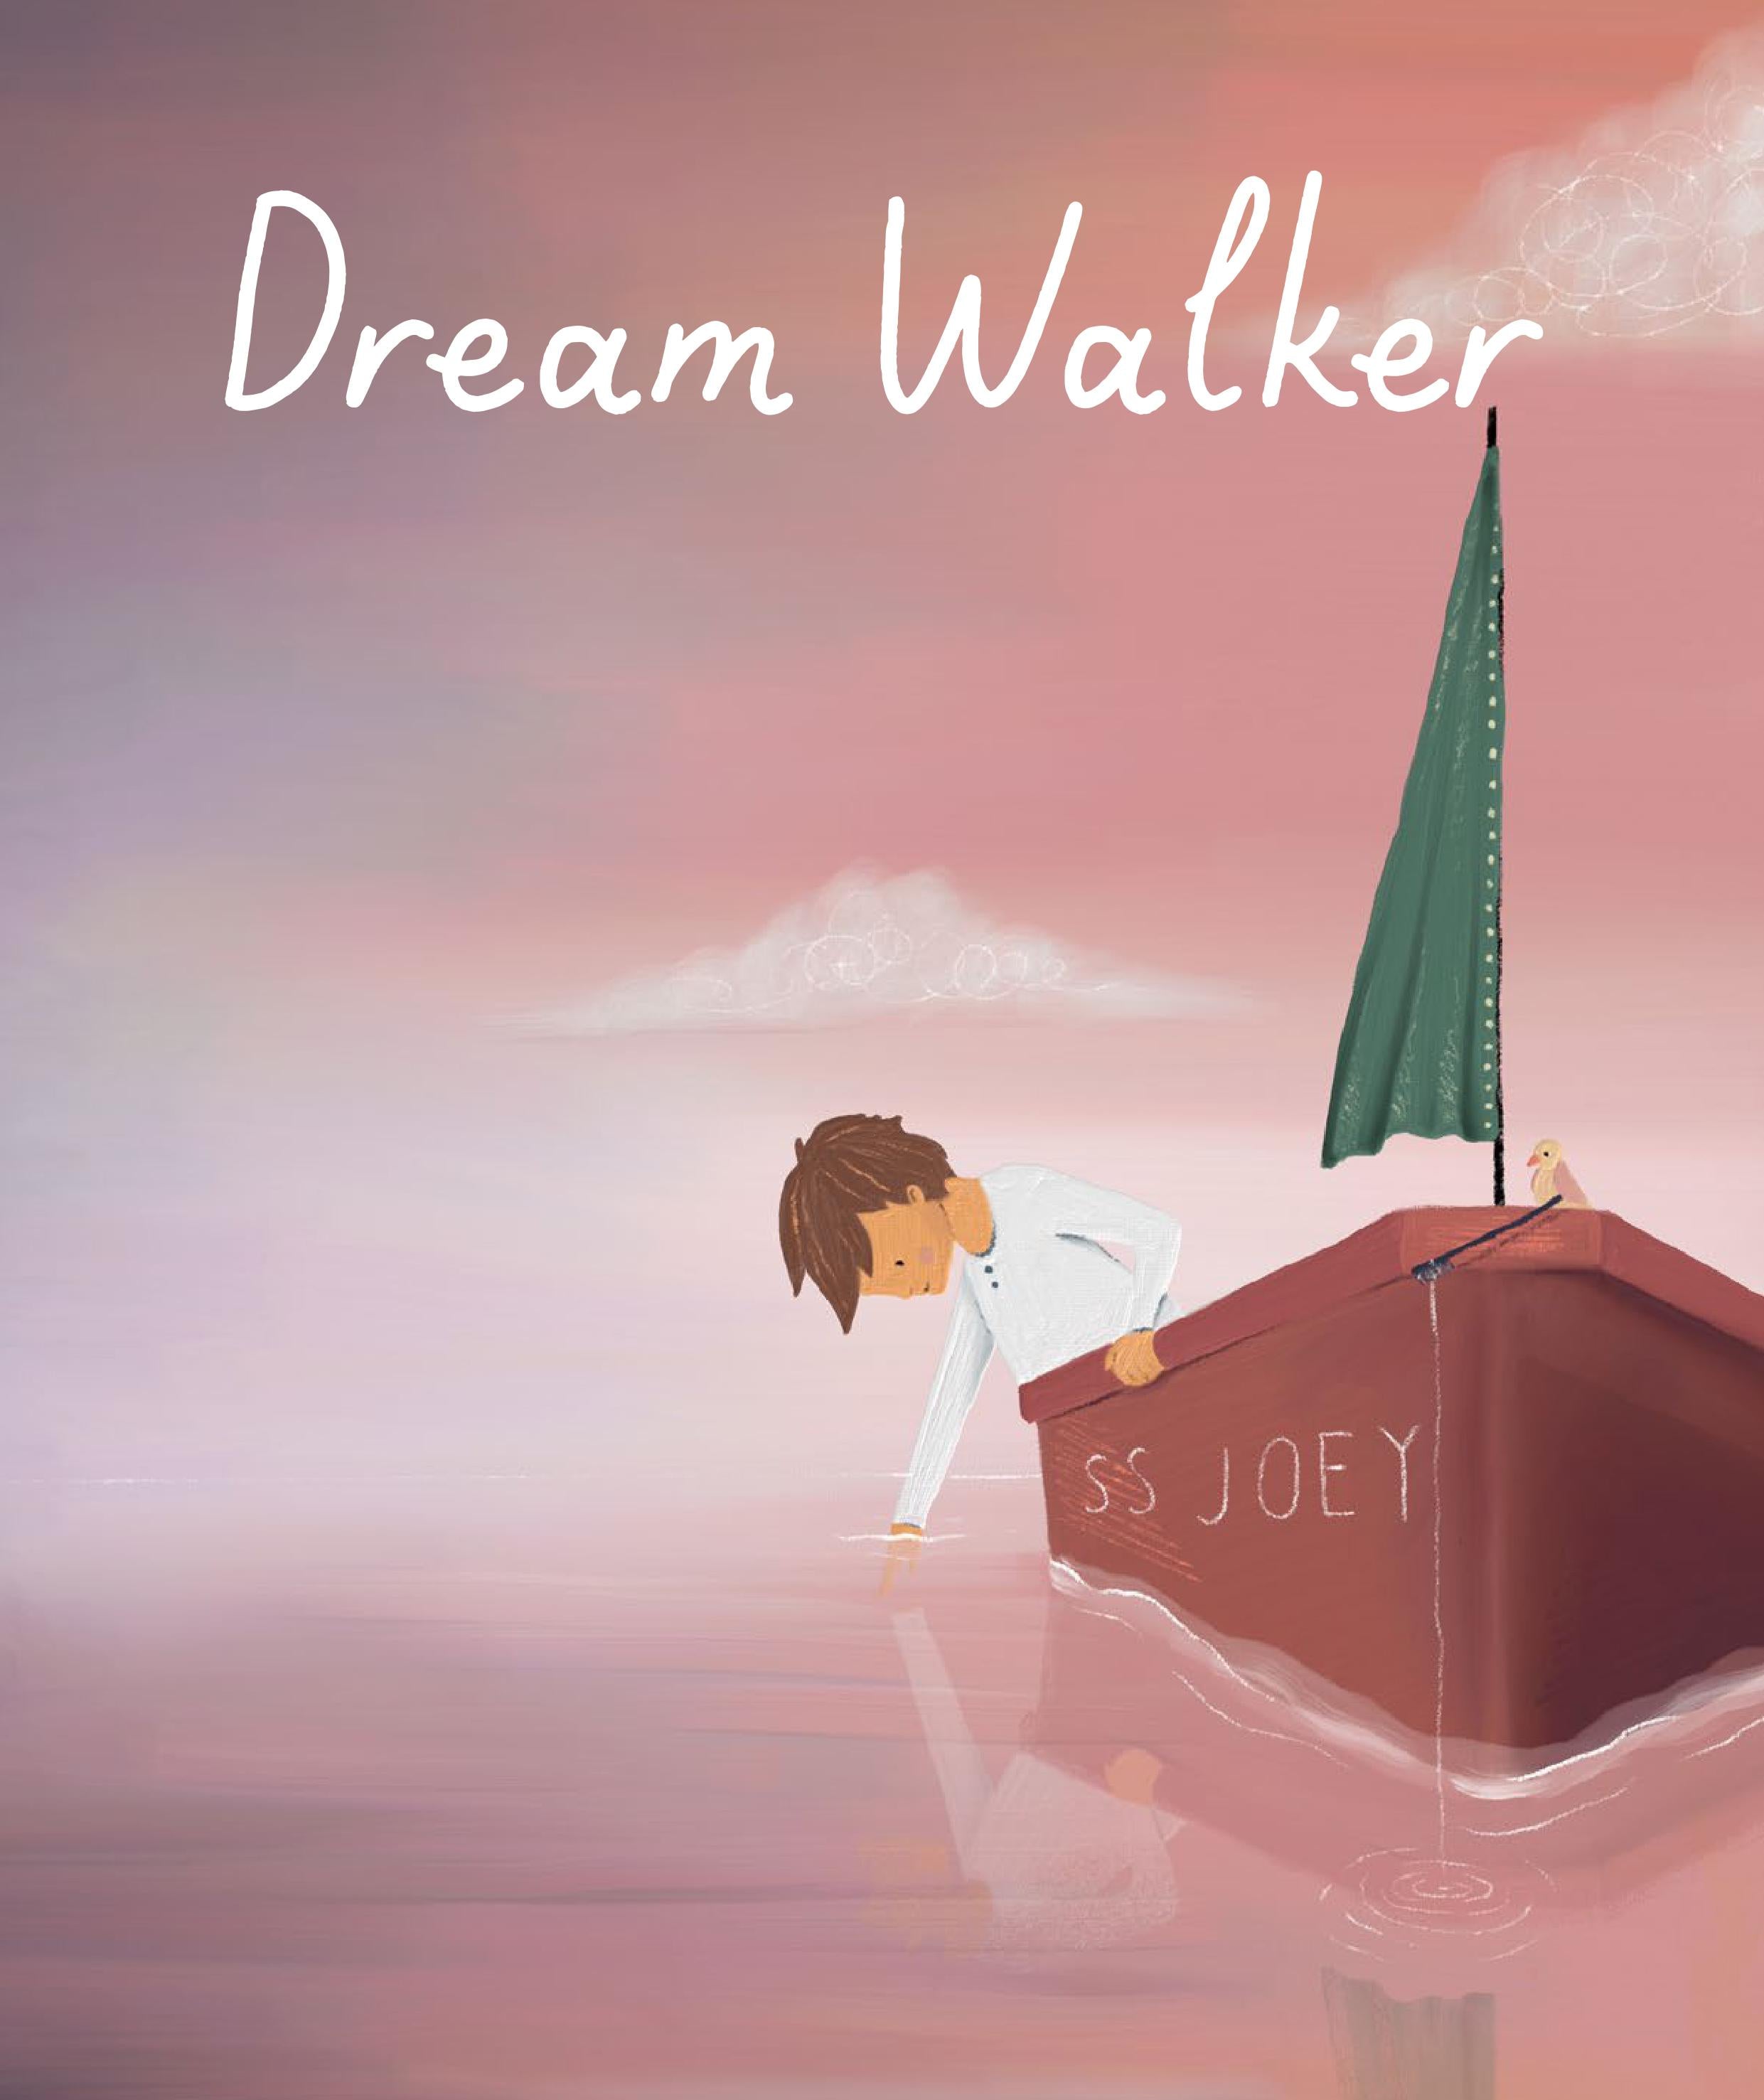 Dream Walker -  The Story of Sleep